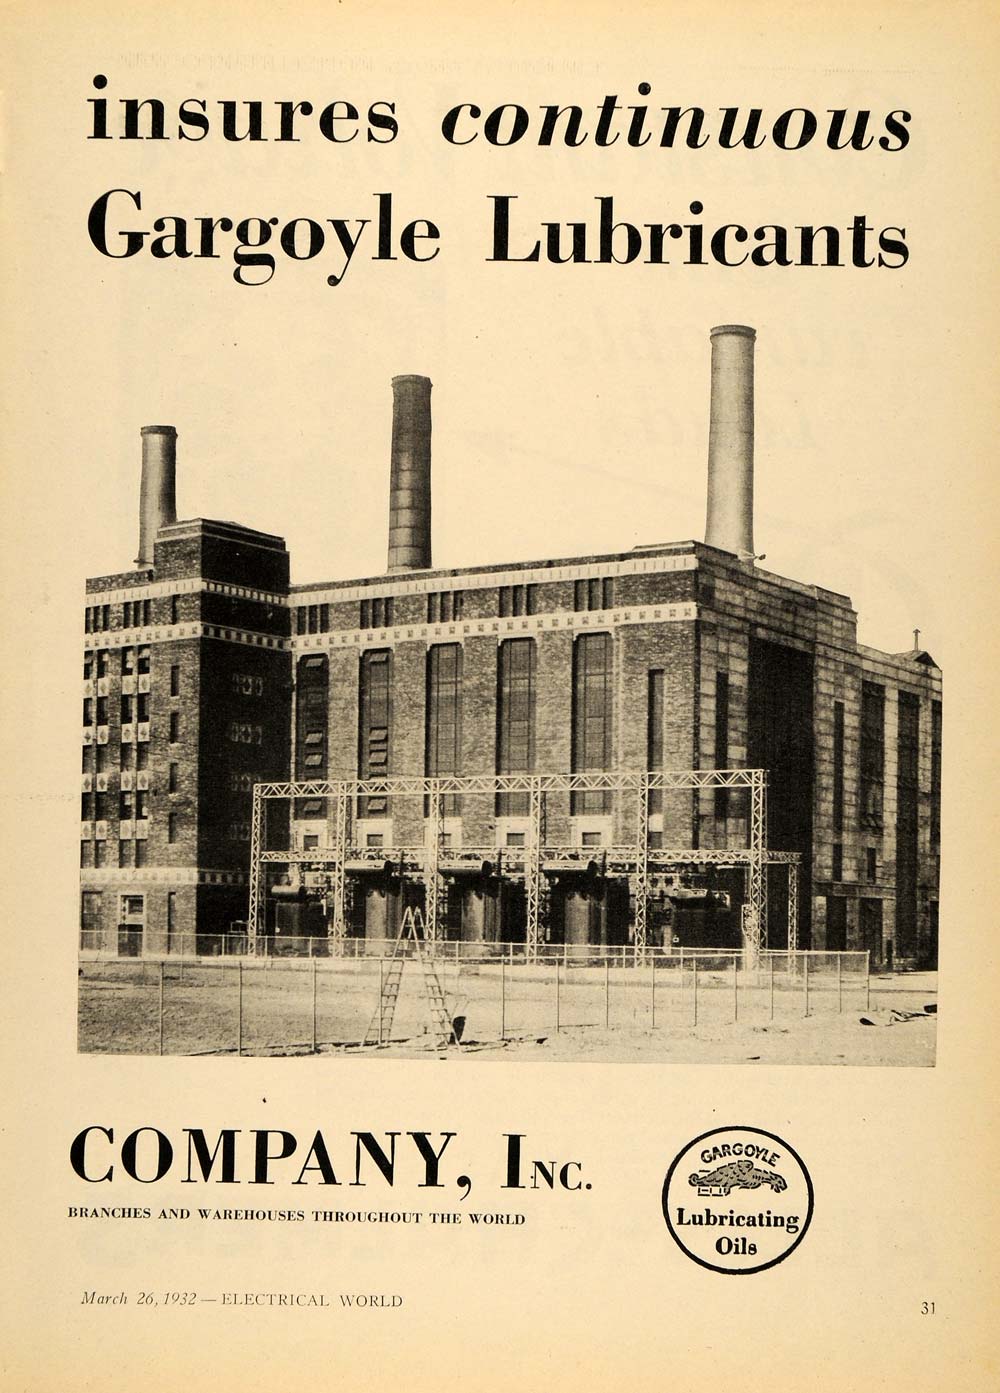 1932 Ad Vacuum Oil Gargoyle Lubricating American Gas Co - ORIGINAL ELC1